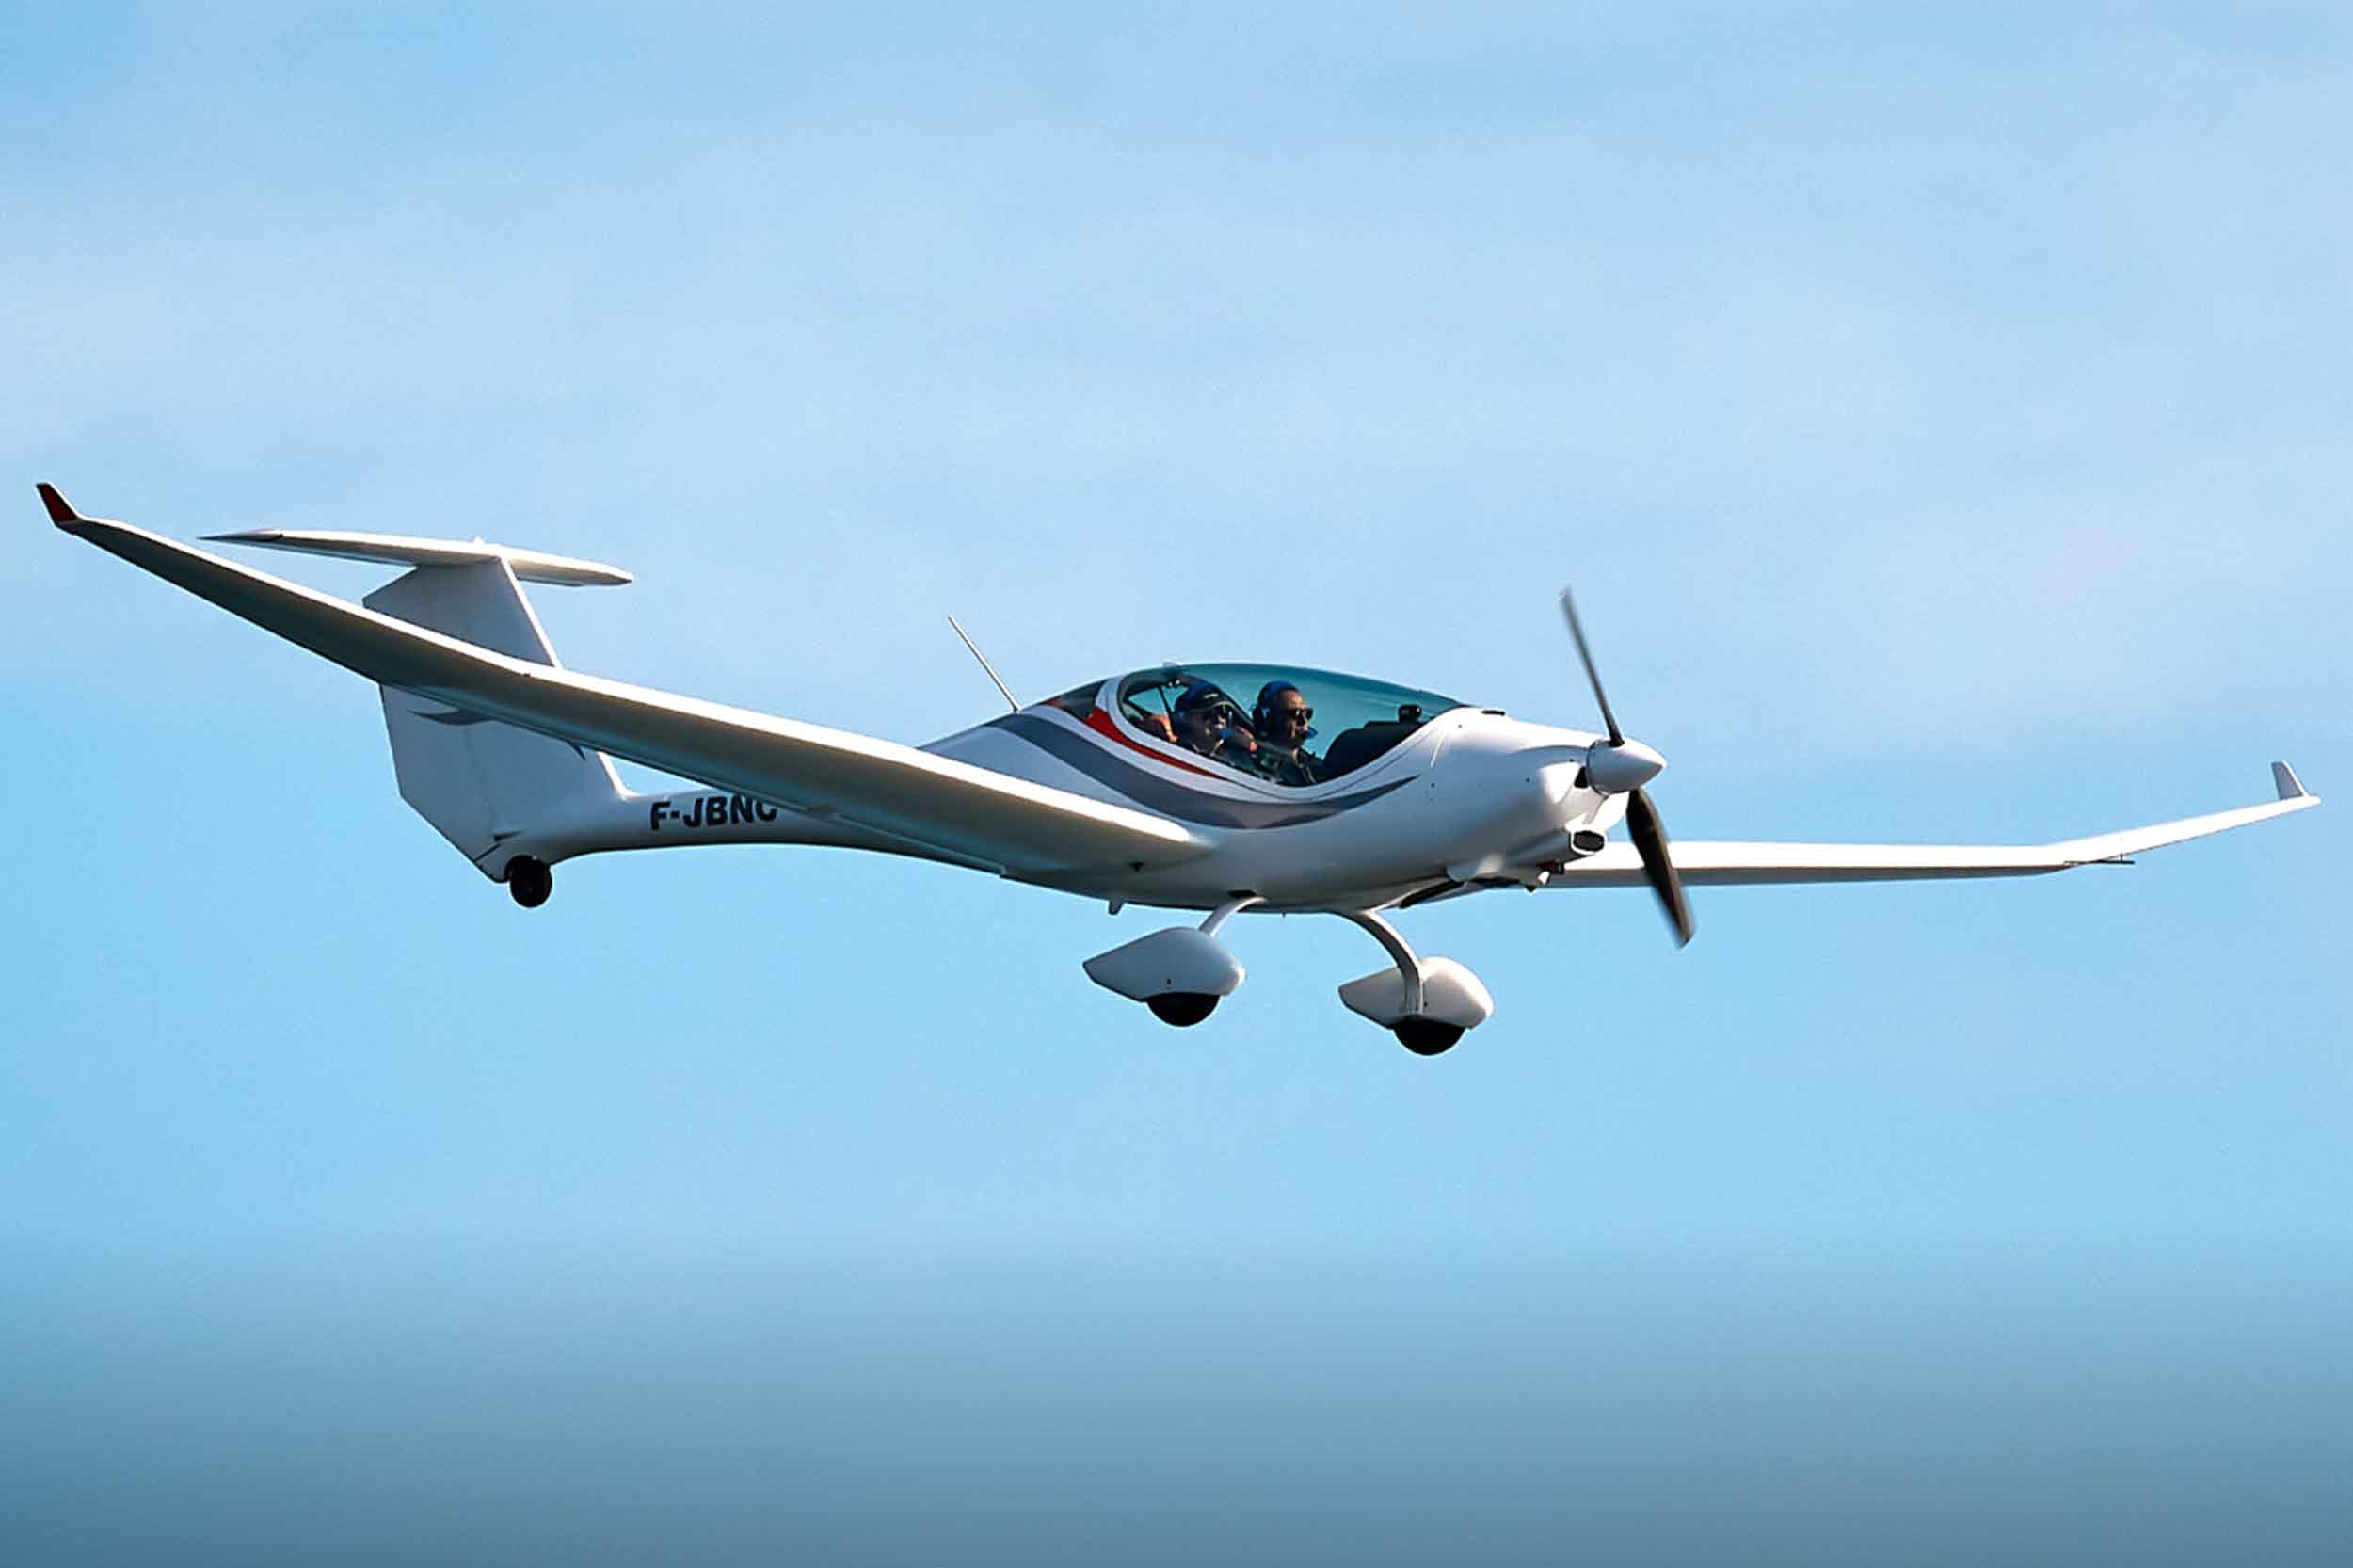 JMB Aircraft's Phoenix motor glider will be at AERO in April